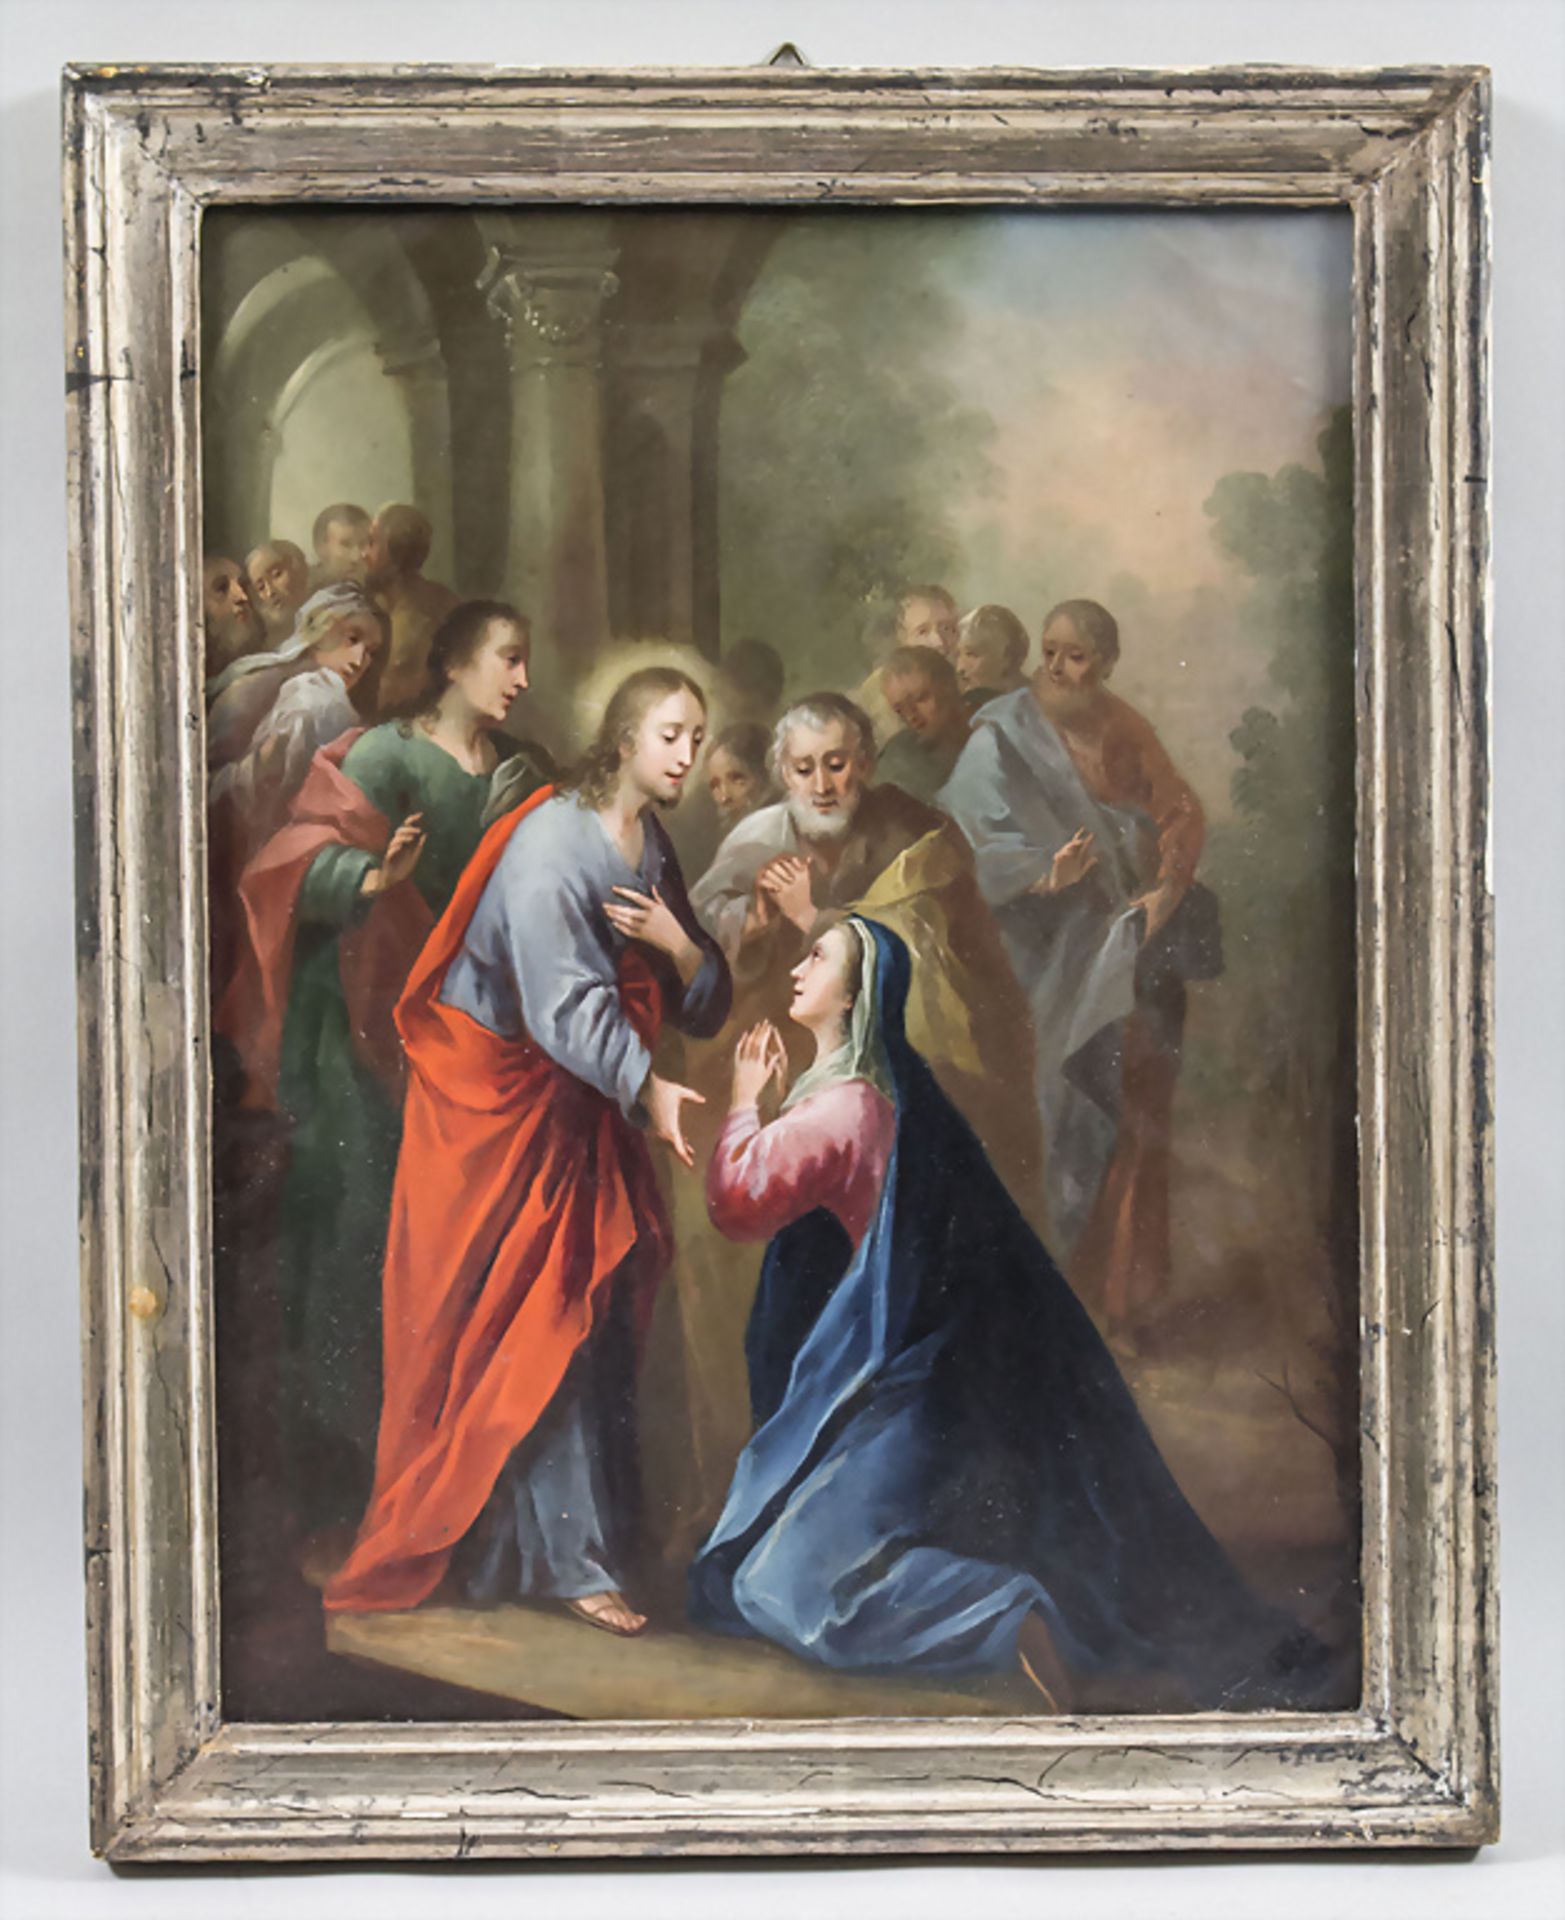 Unbekannter Künstler des 16. /17. Jh., 'Anbetung des Heilands' / 'Adoration of the Savior', ... - Image 2 of 3